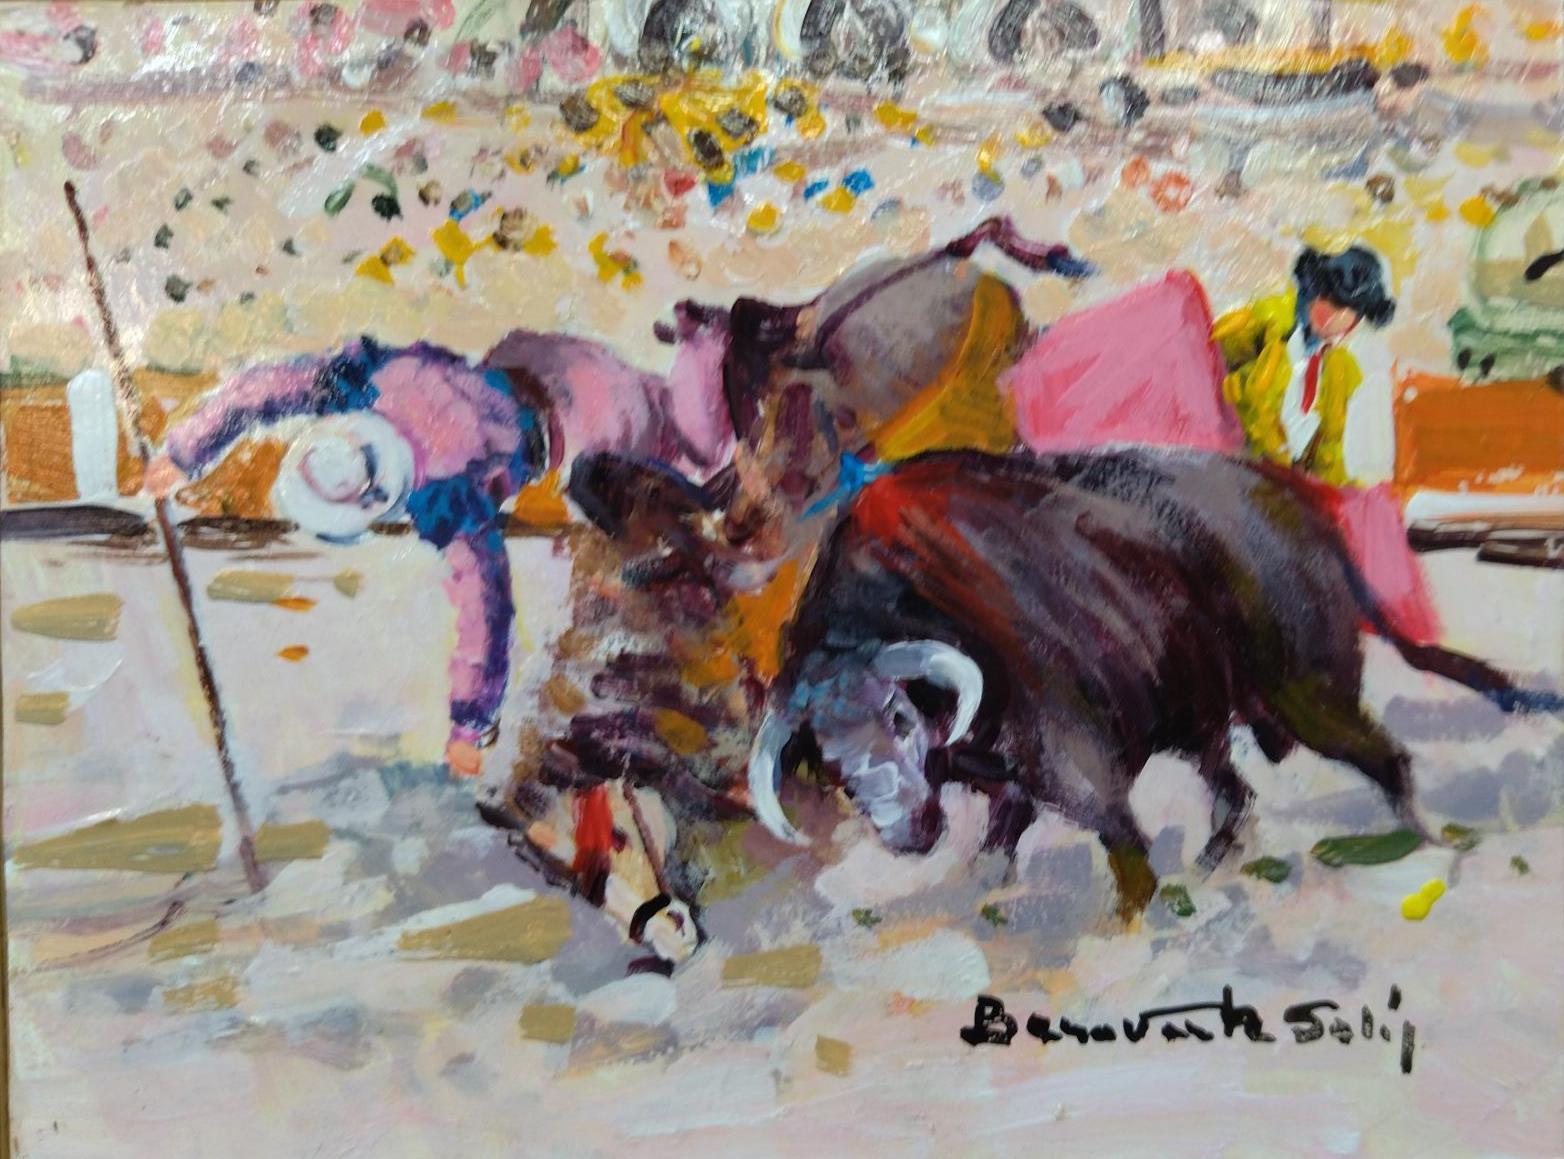 Benavente Solis Figurative Painting -   Benavente Solís  46.2 bullfight. picador. little original expressionist 